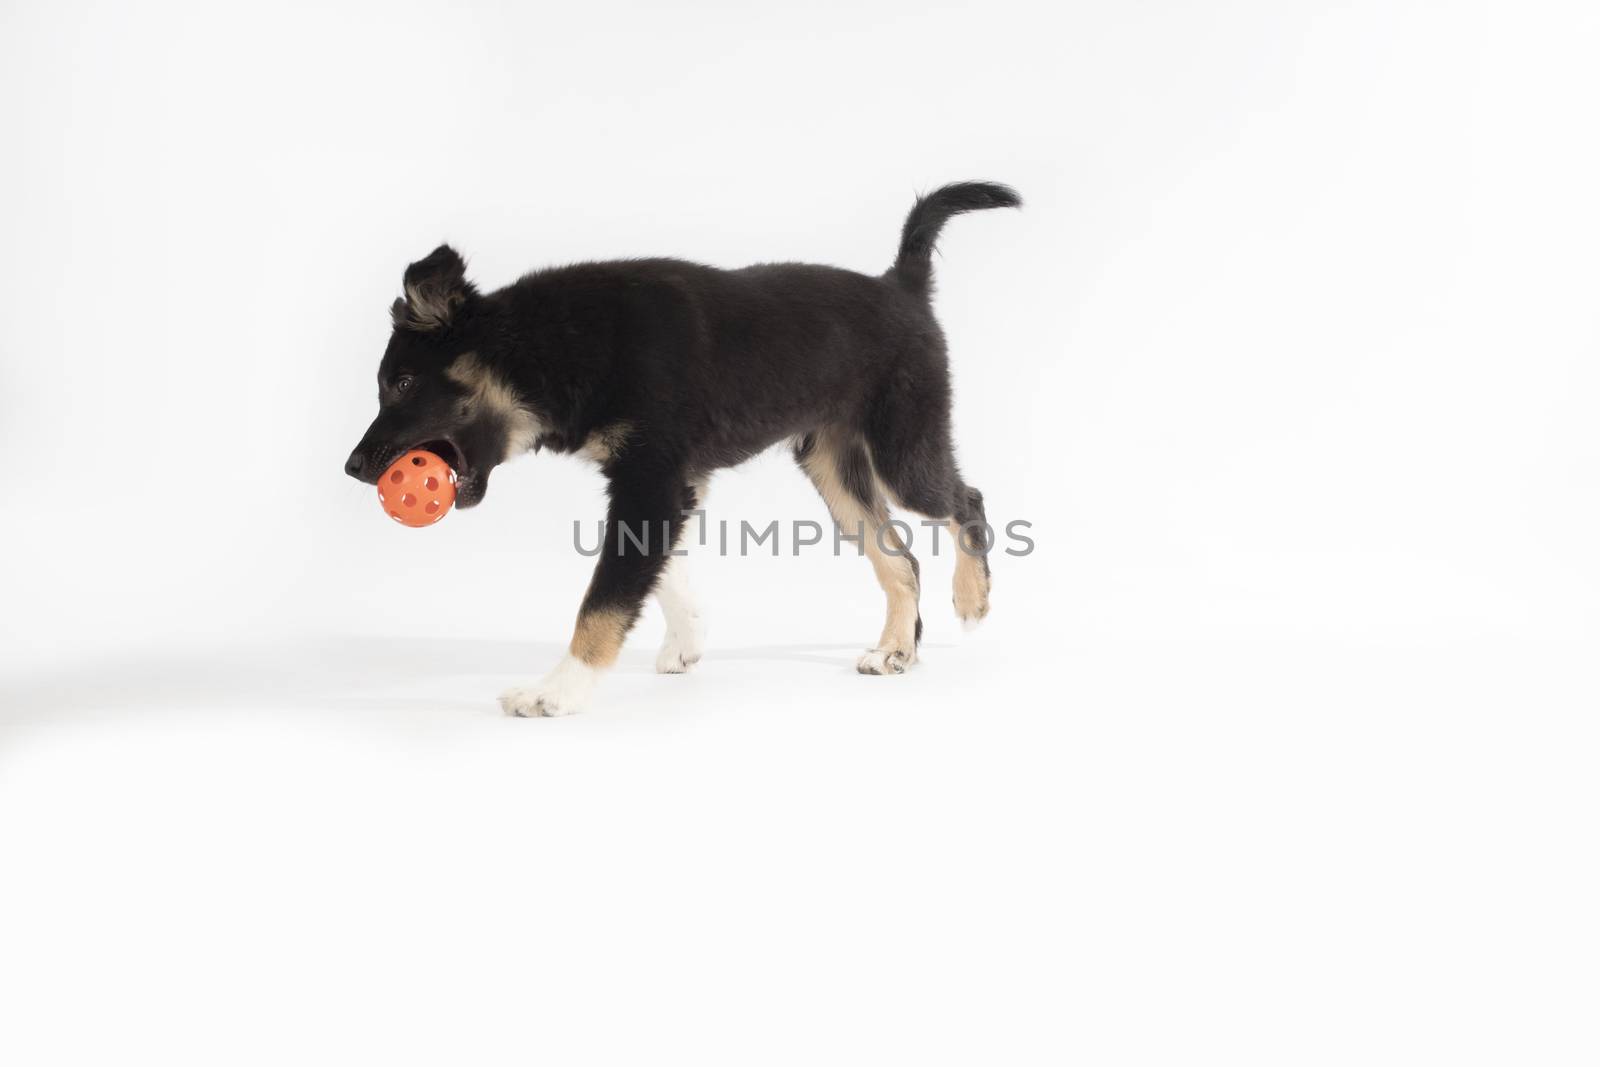 Puppy dog, Border Collie, with ball, white background by avanheertum